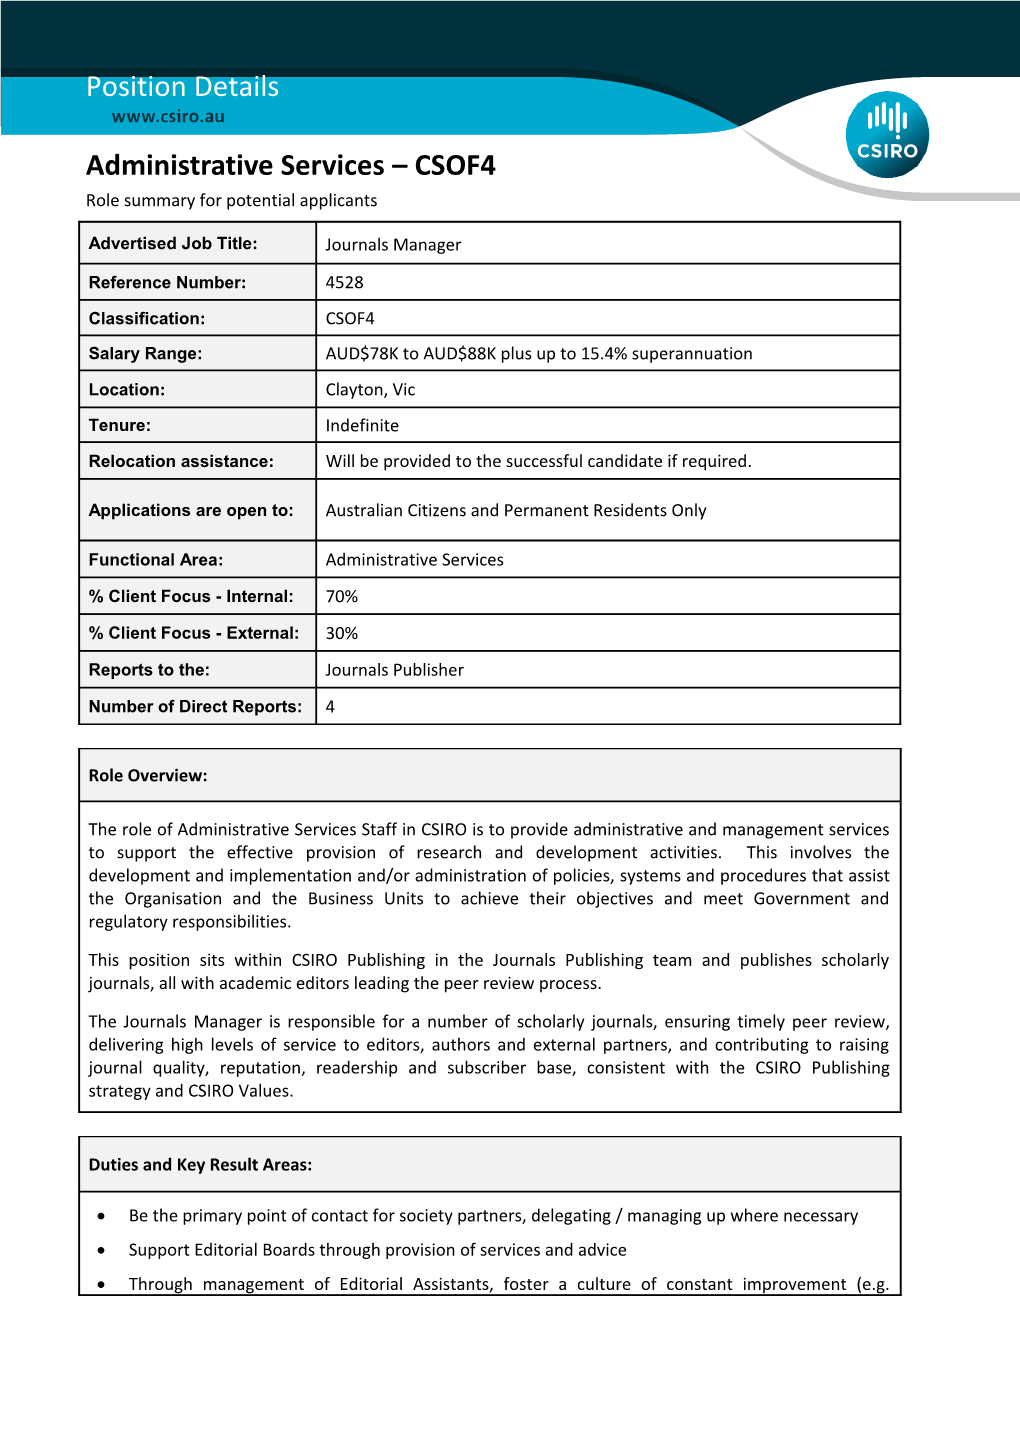 Position Details - Administrative Services - CSOF4 s1